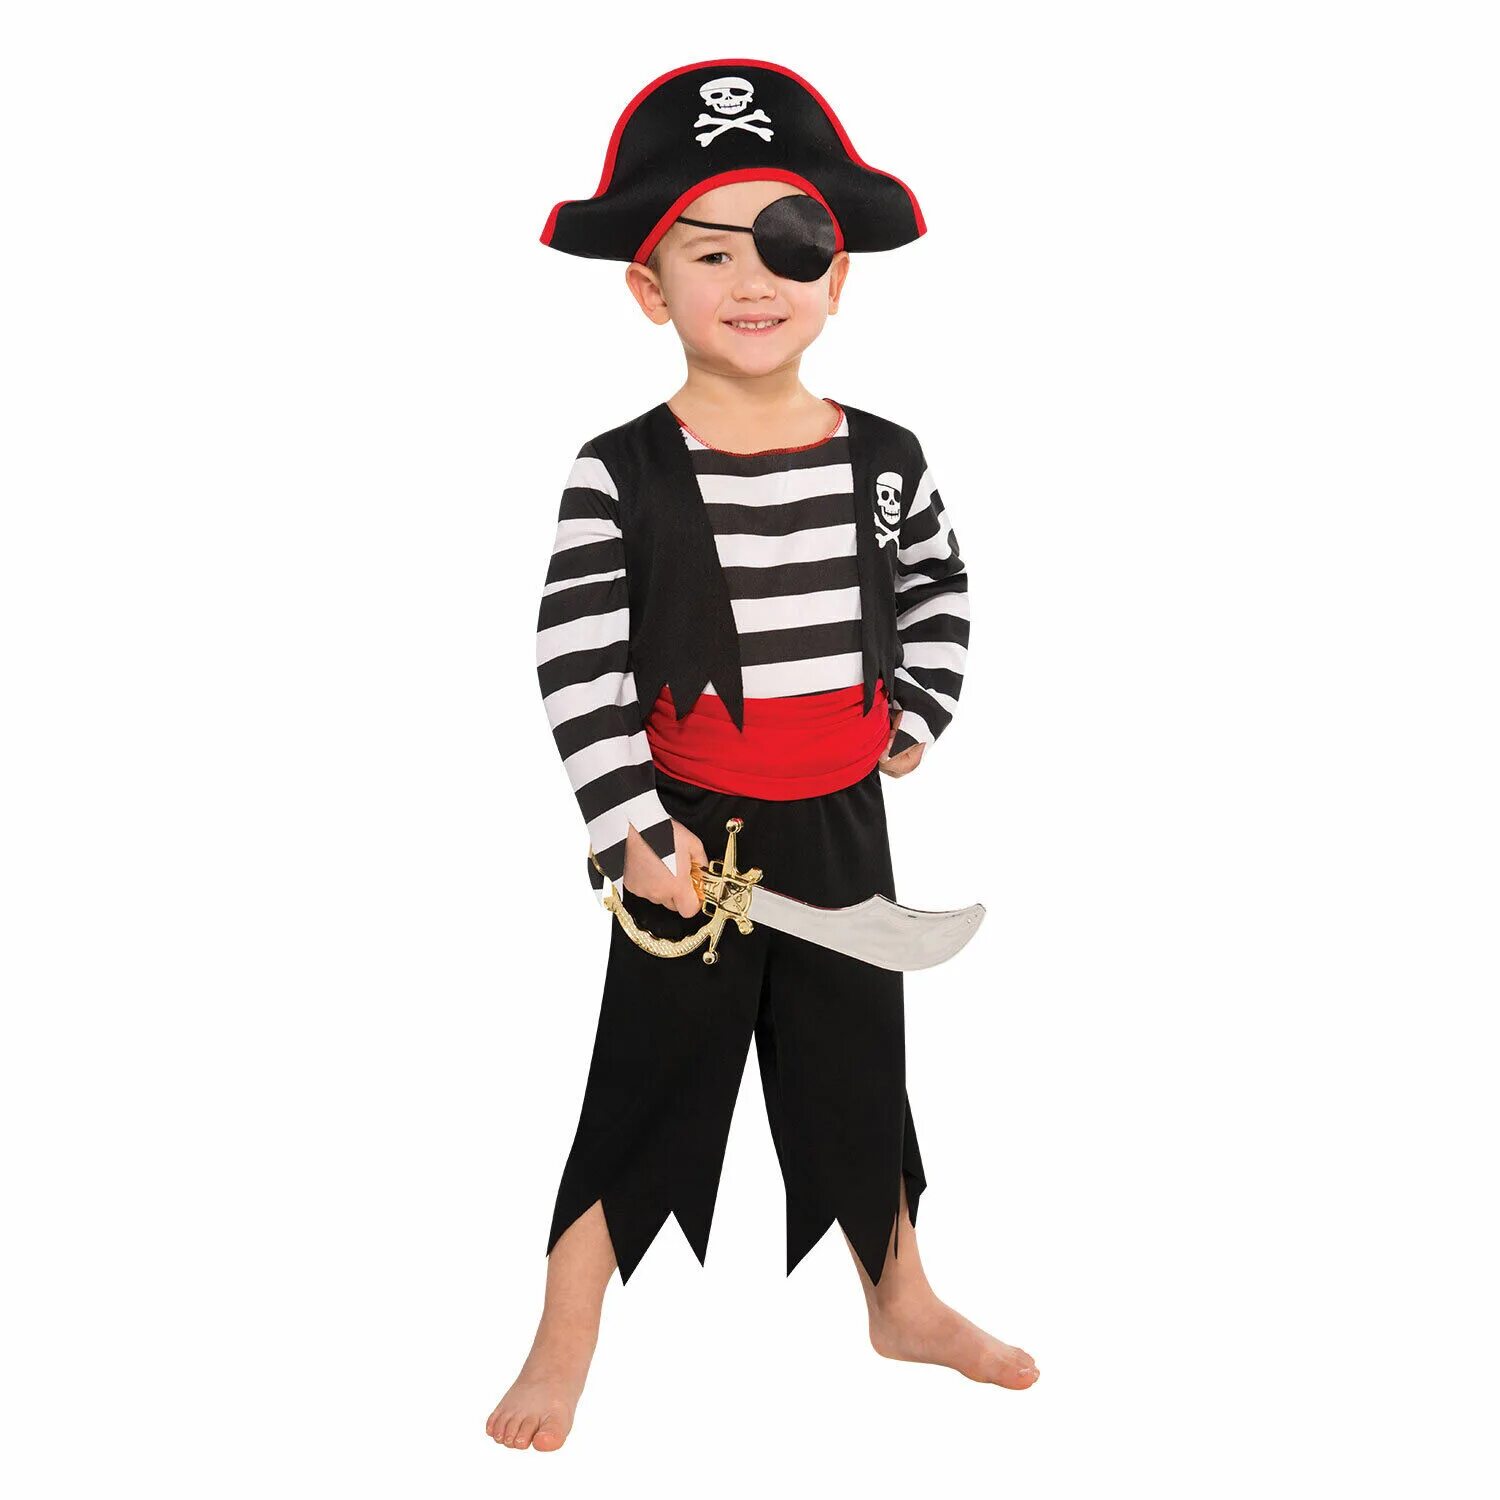 Пират костюм. Карнавальный костюм детский пират Карнавалия. Пираты КИДА. Детский костюм "пират Джек". Костюм пиратский для мальчика.